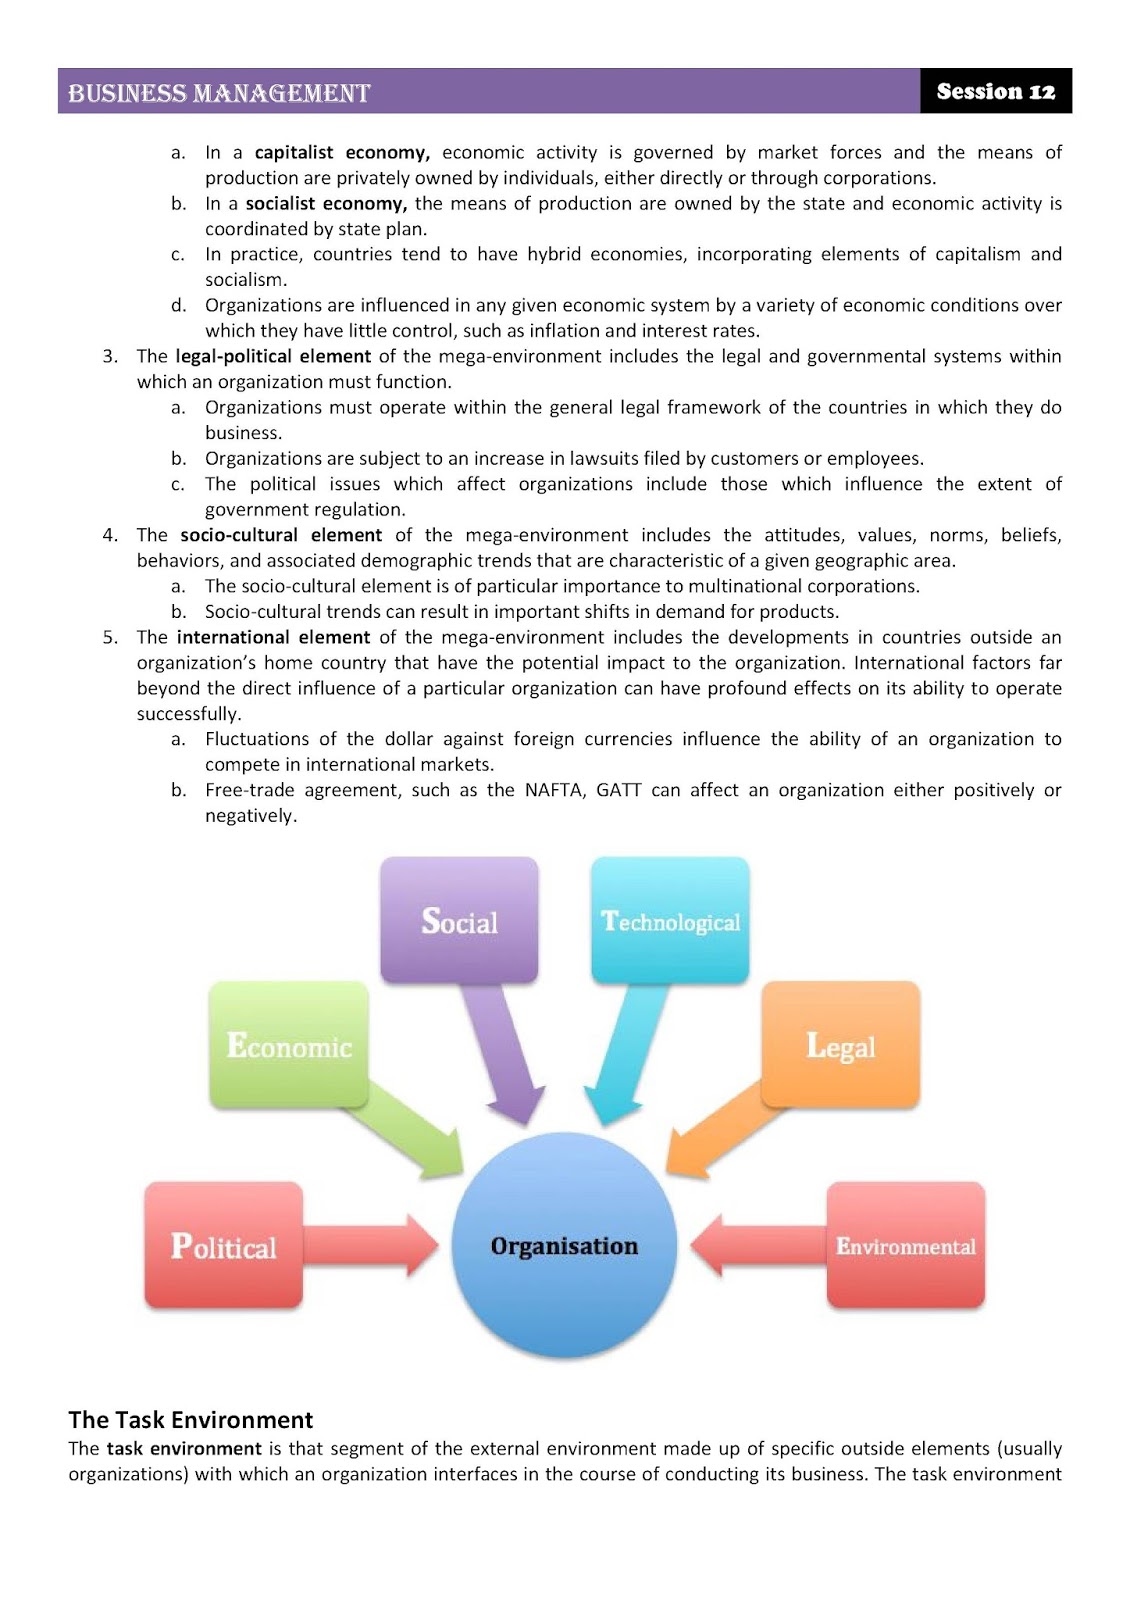 organizational environment essay